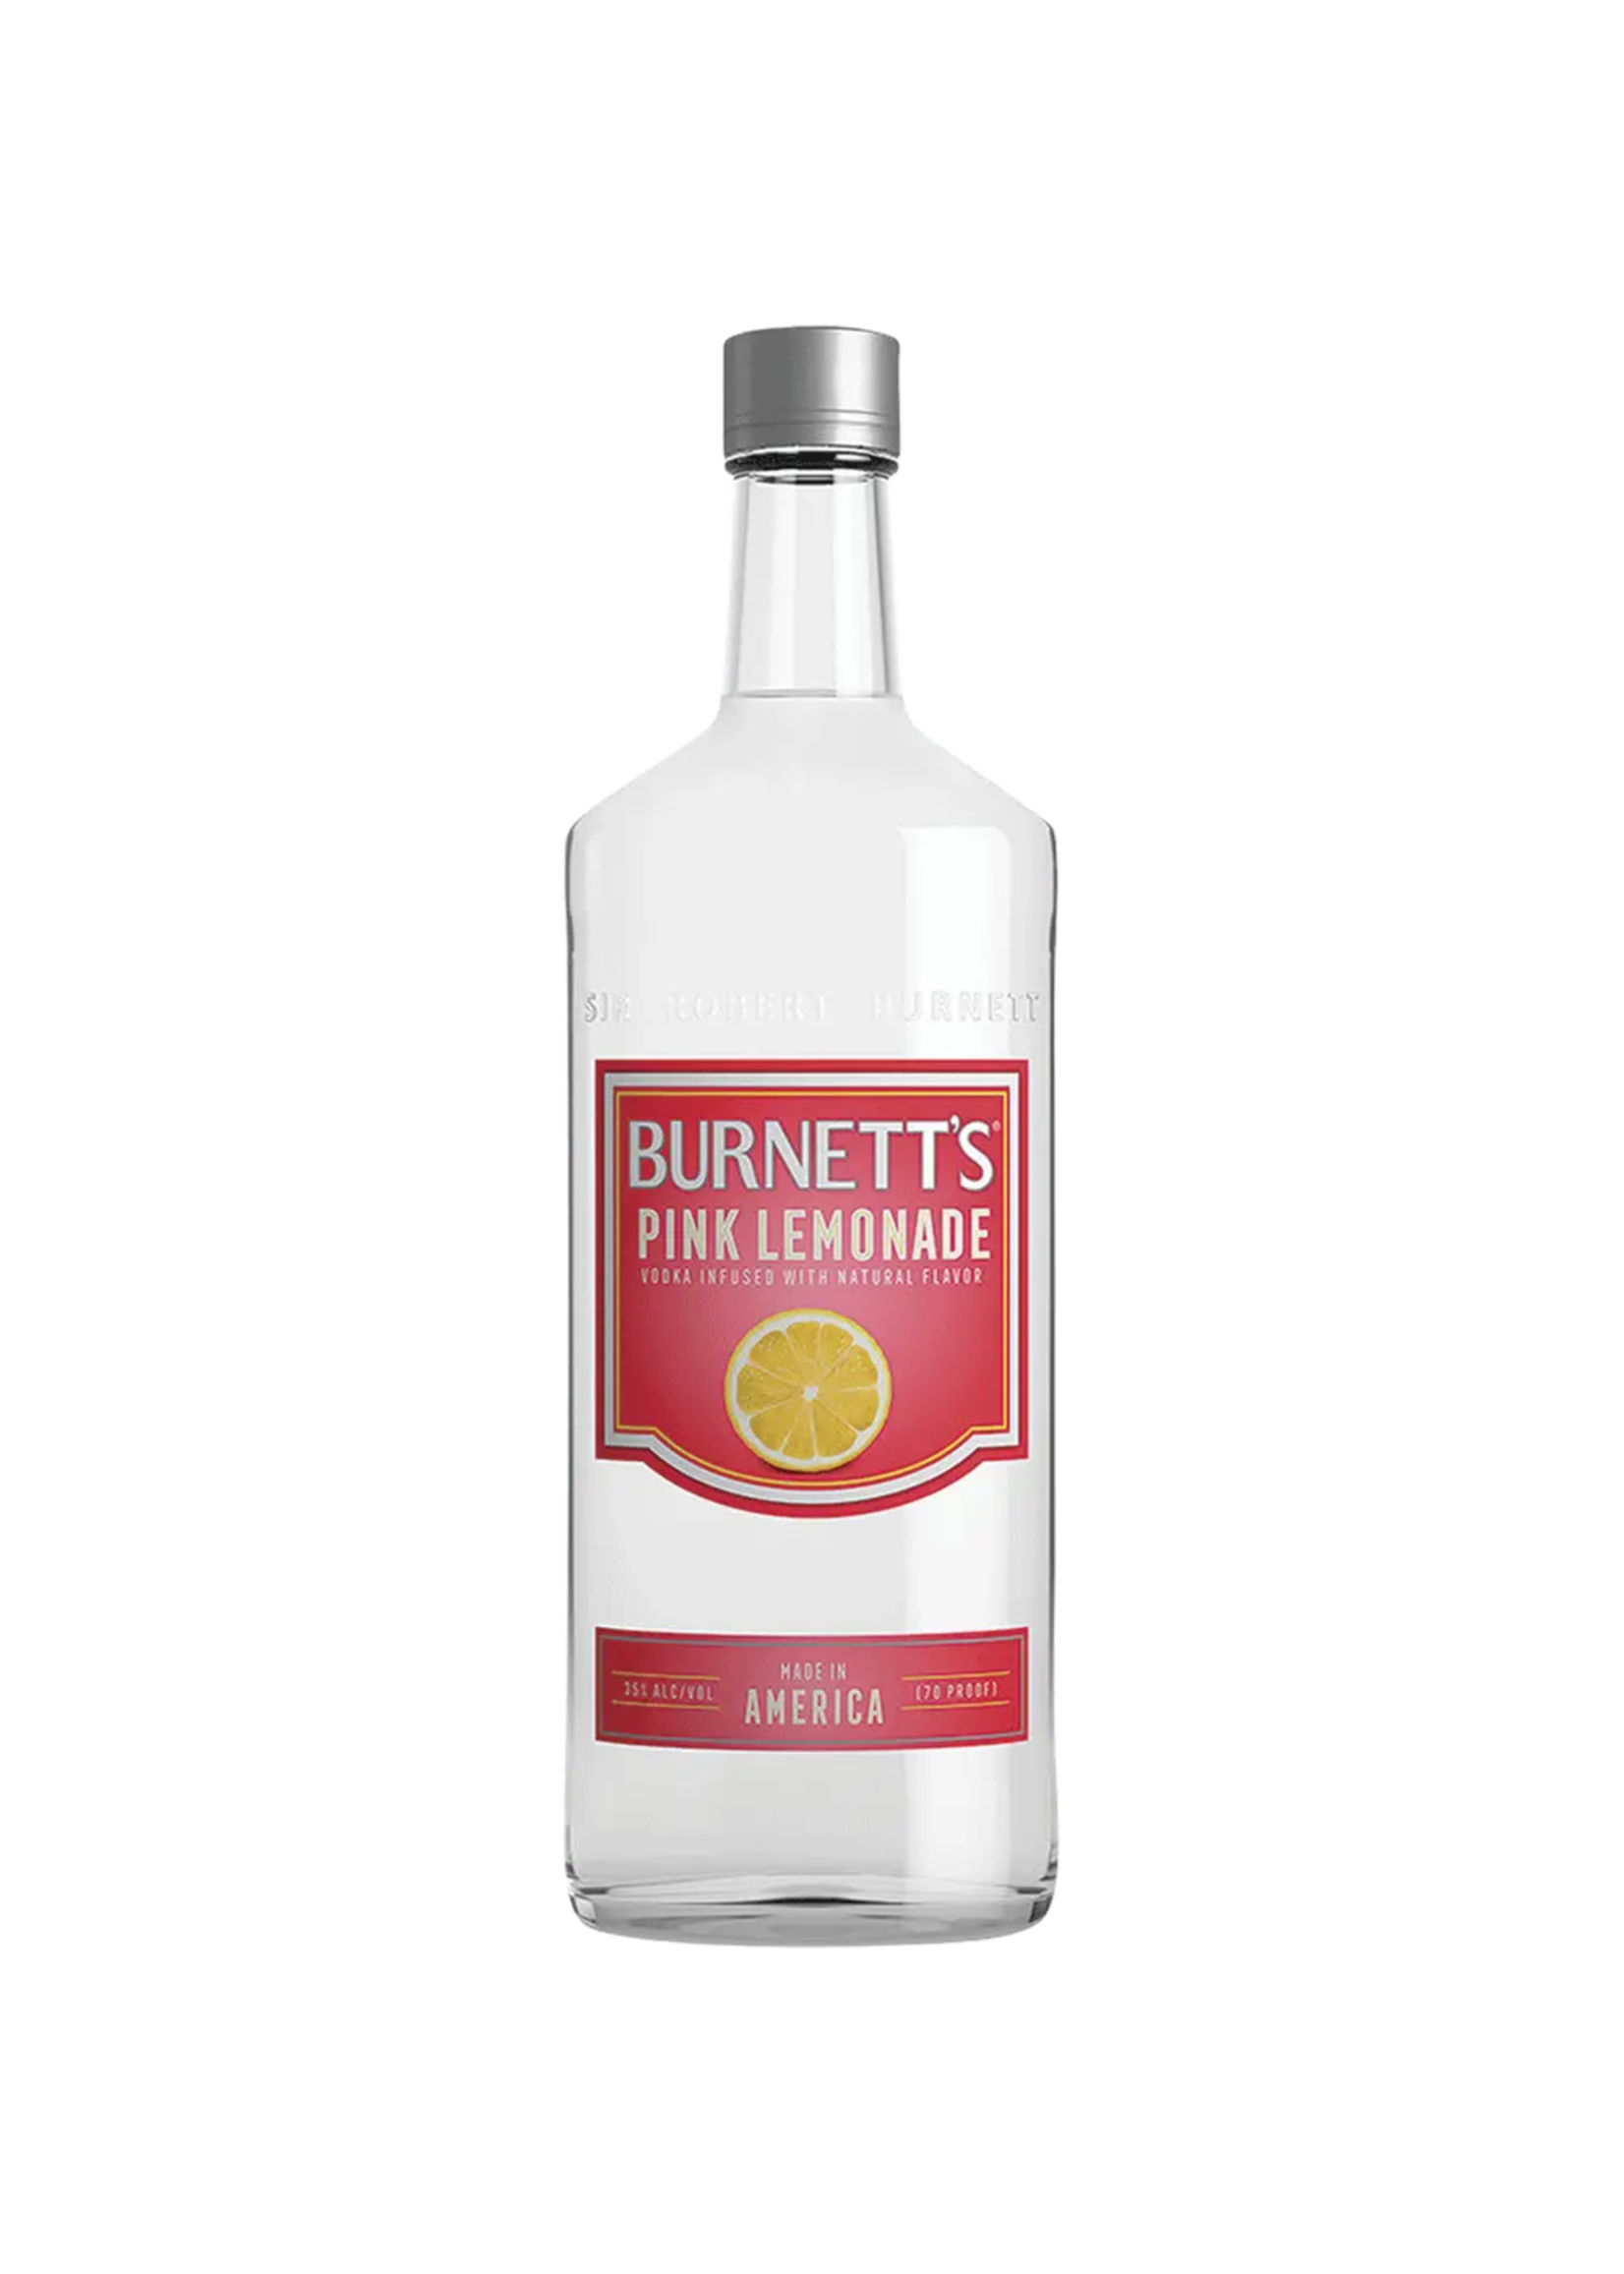 Burnetts Pink Lemonade 70Proof Pet 1.75 Ltr